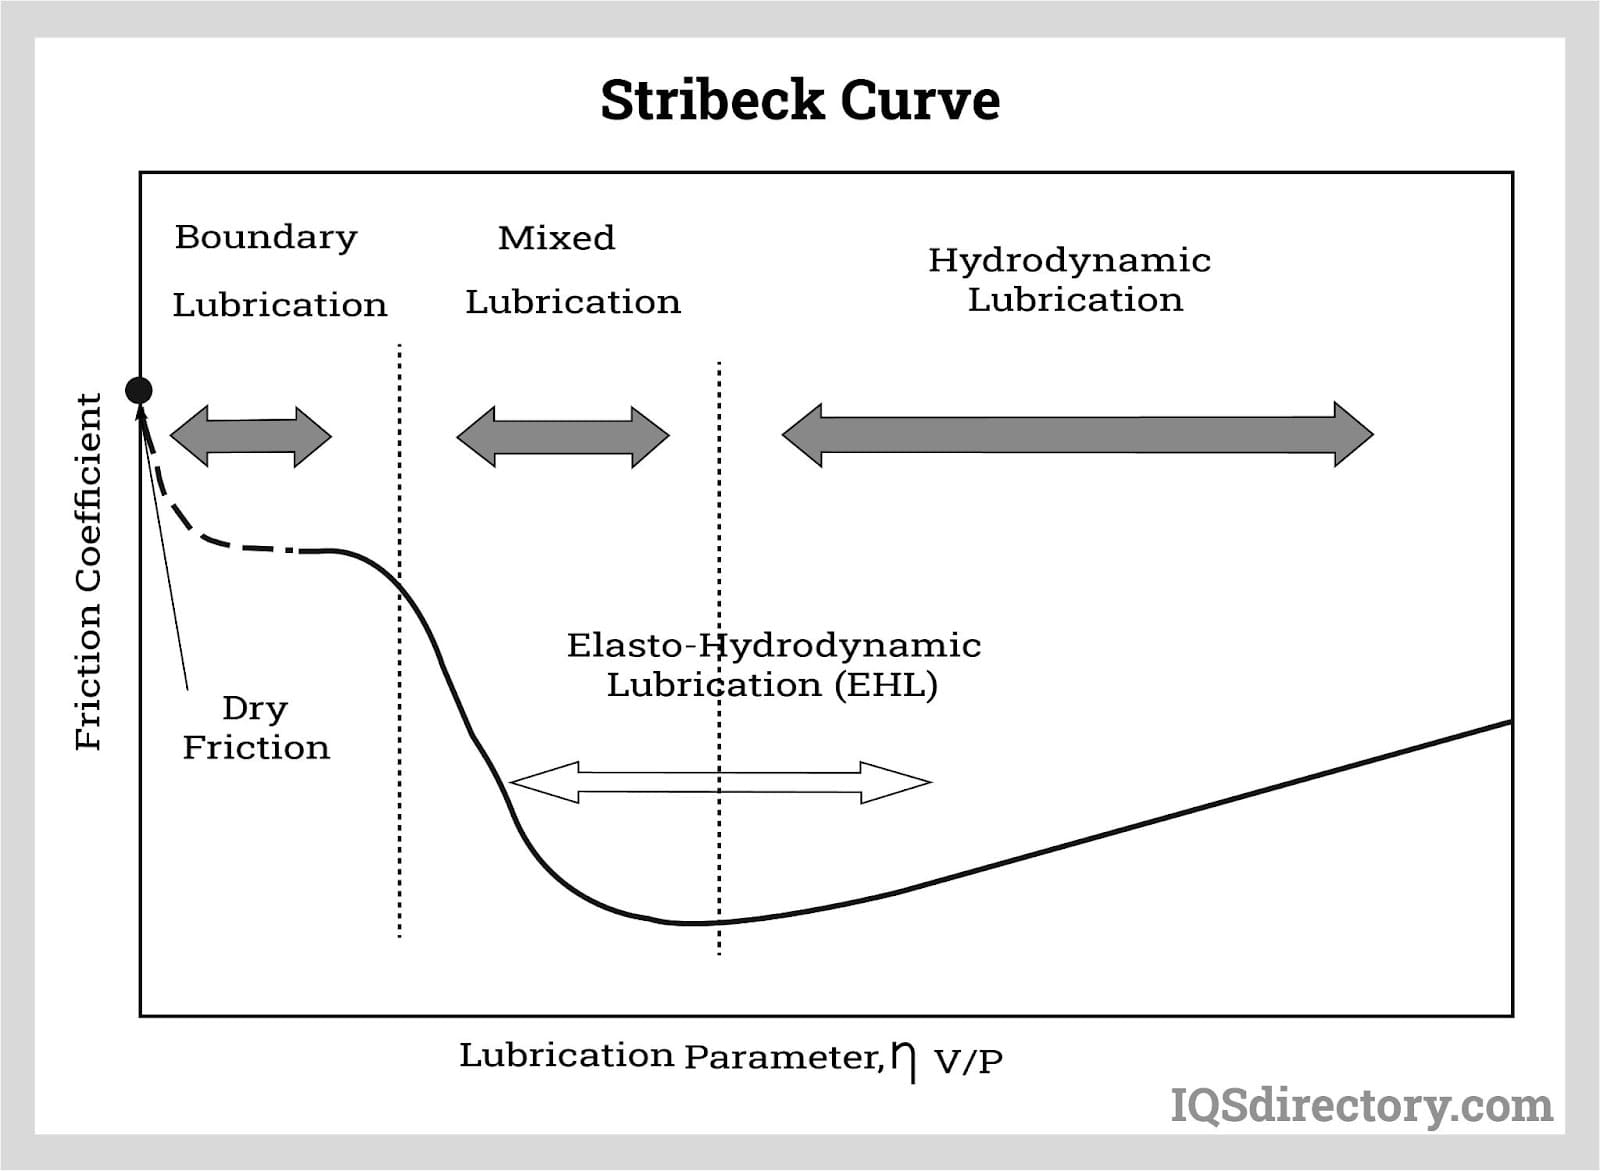 Stribeck Curve